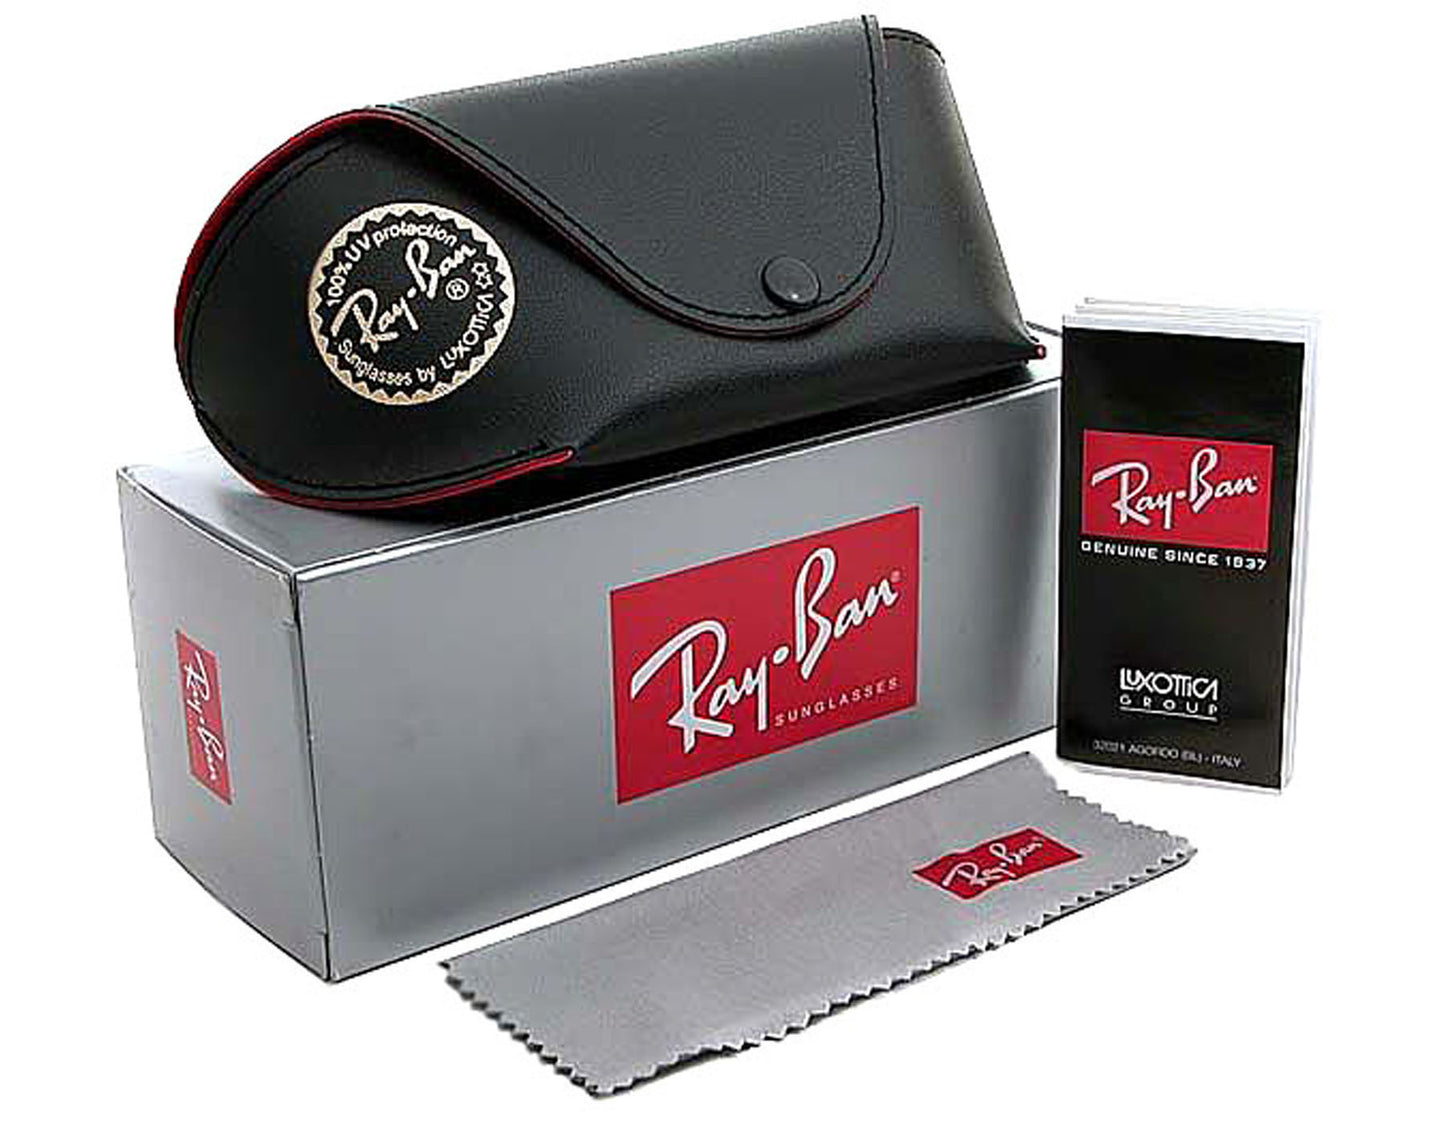 Ray Ban RB4165-601-8G-55  New Sunglasses